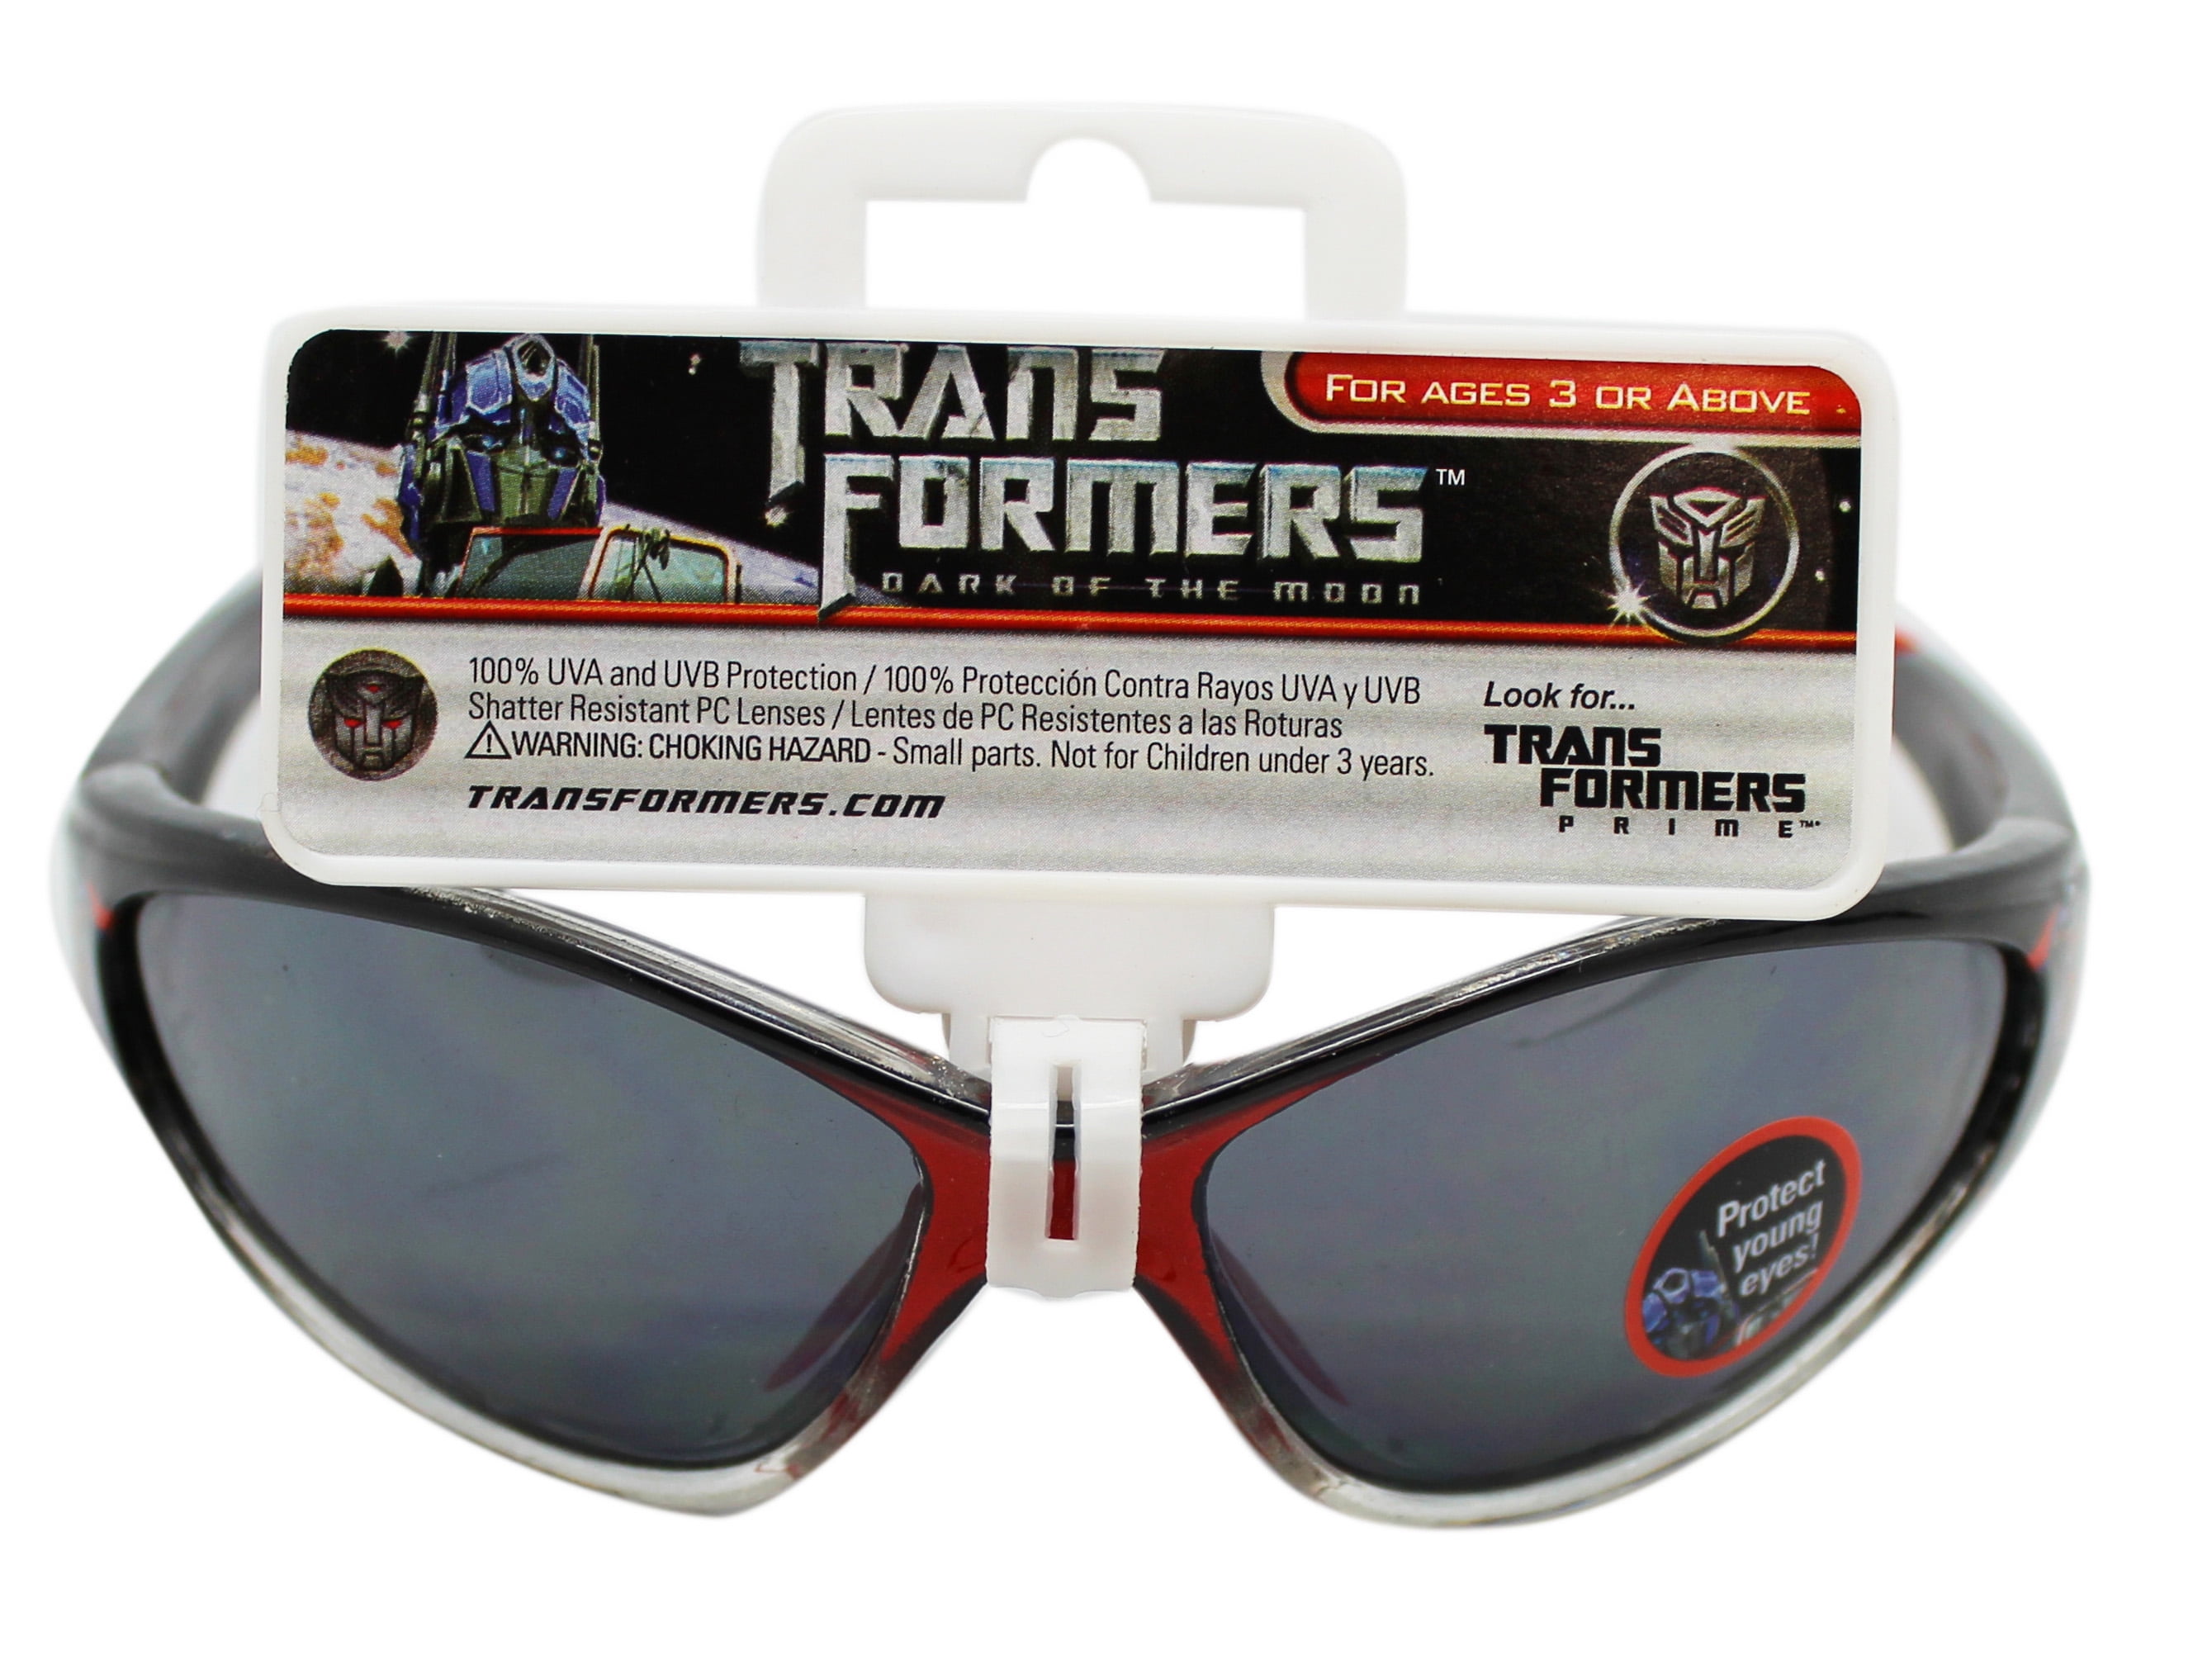 Transformers: Dark of the Moon Black/Red Kids Sunglasses w/Frame Grip Ends  - Walmart.com